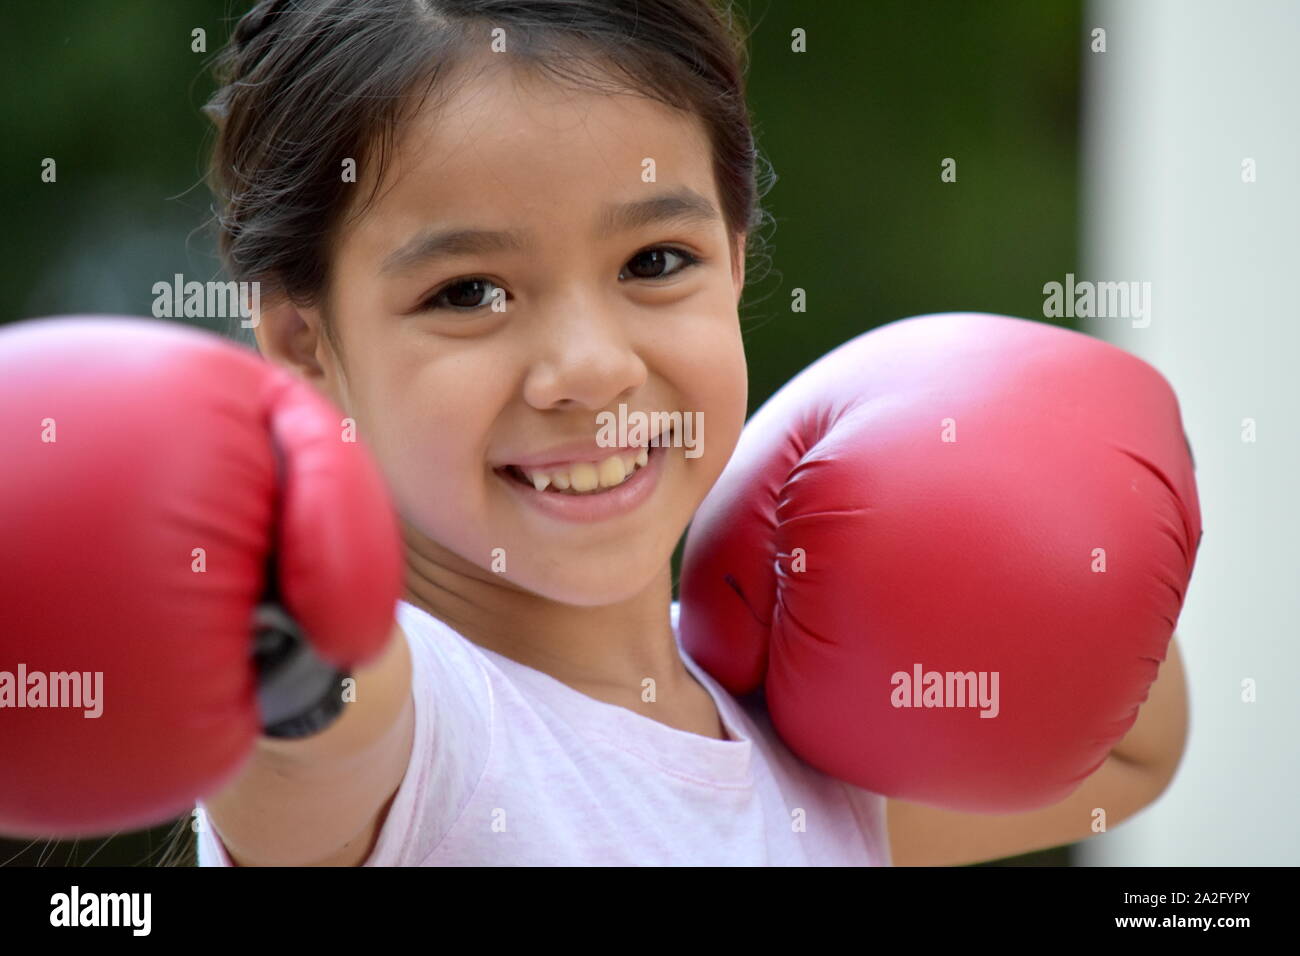 Happy Child Athlete Wearing Boxing Gloves Stock Photo